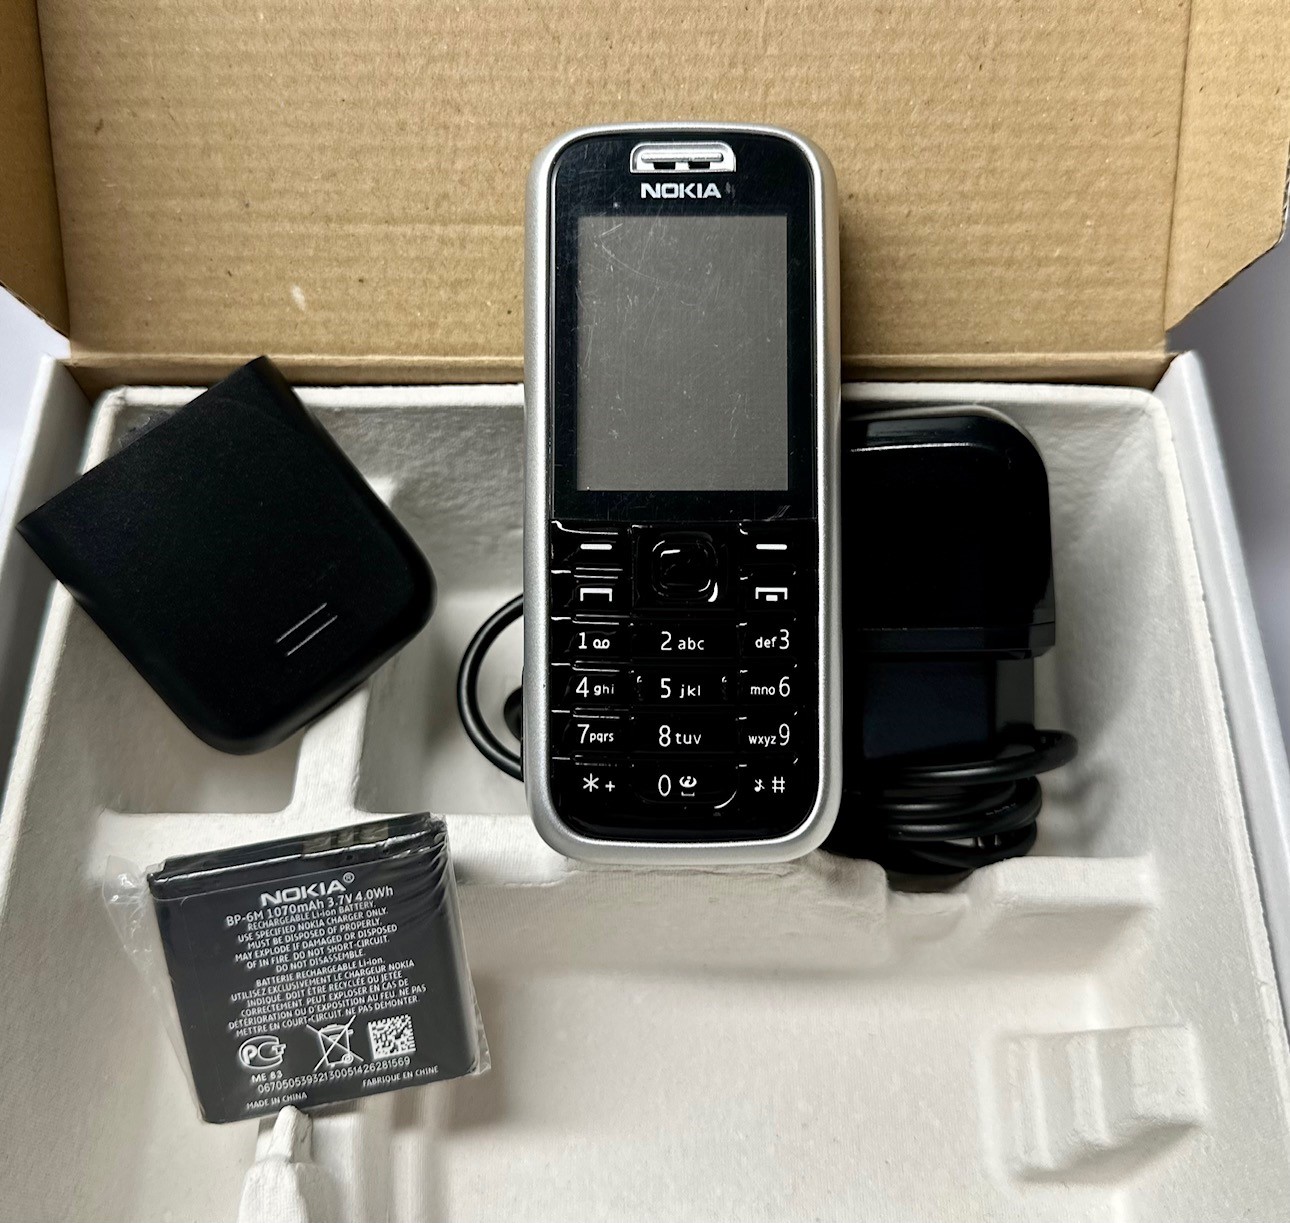 Nokia 6233 Tasten-Handy Mobile Phone Tri-Band Bluetooth UMTS Kamera MP3 wie Neu